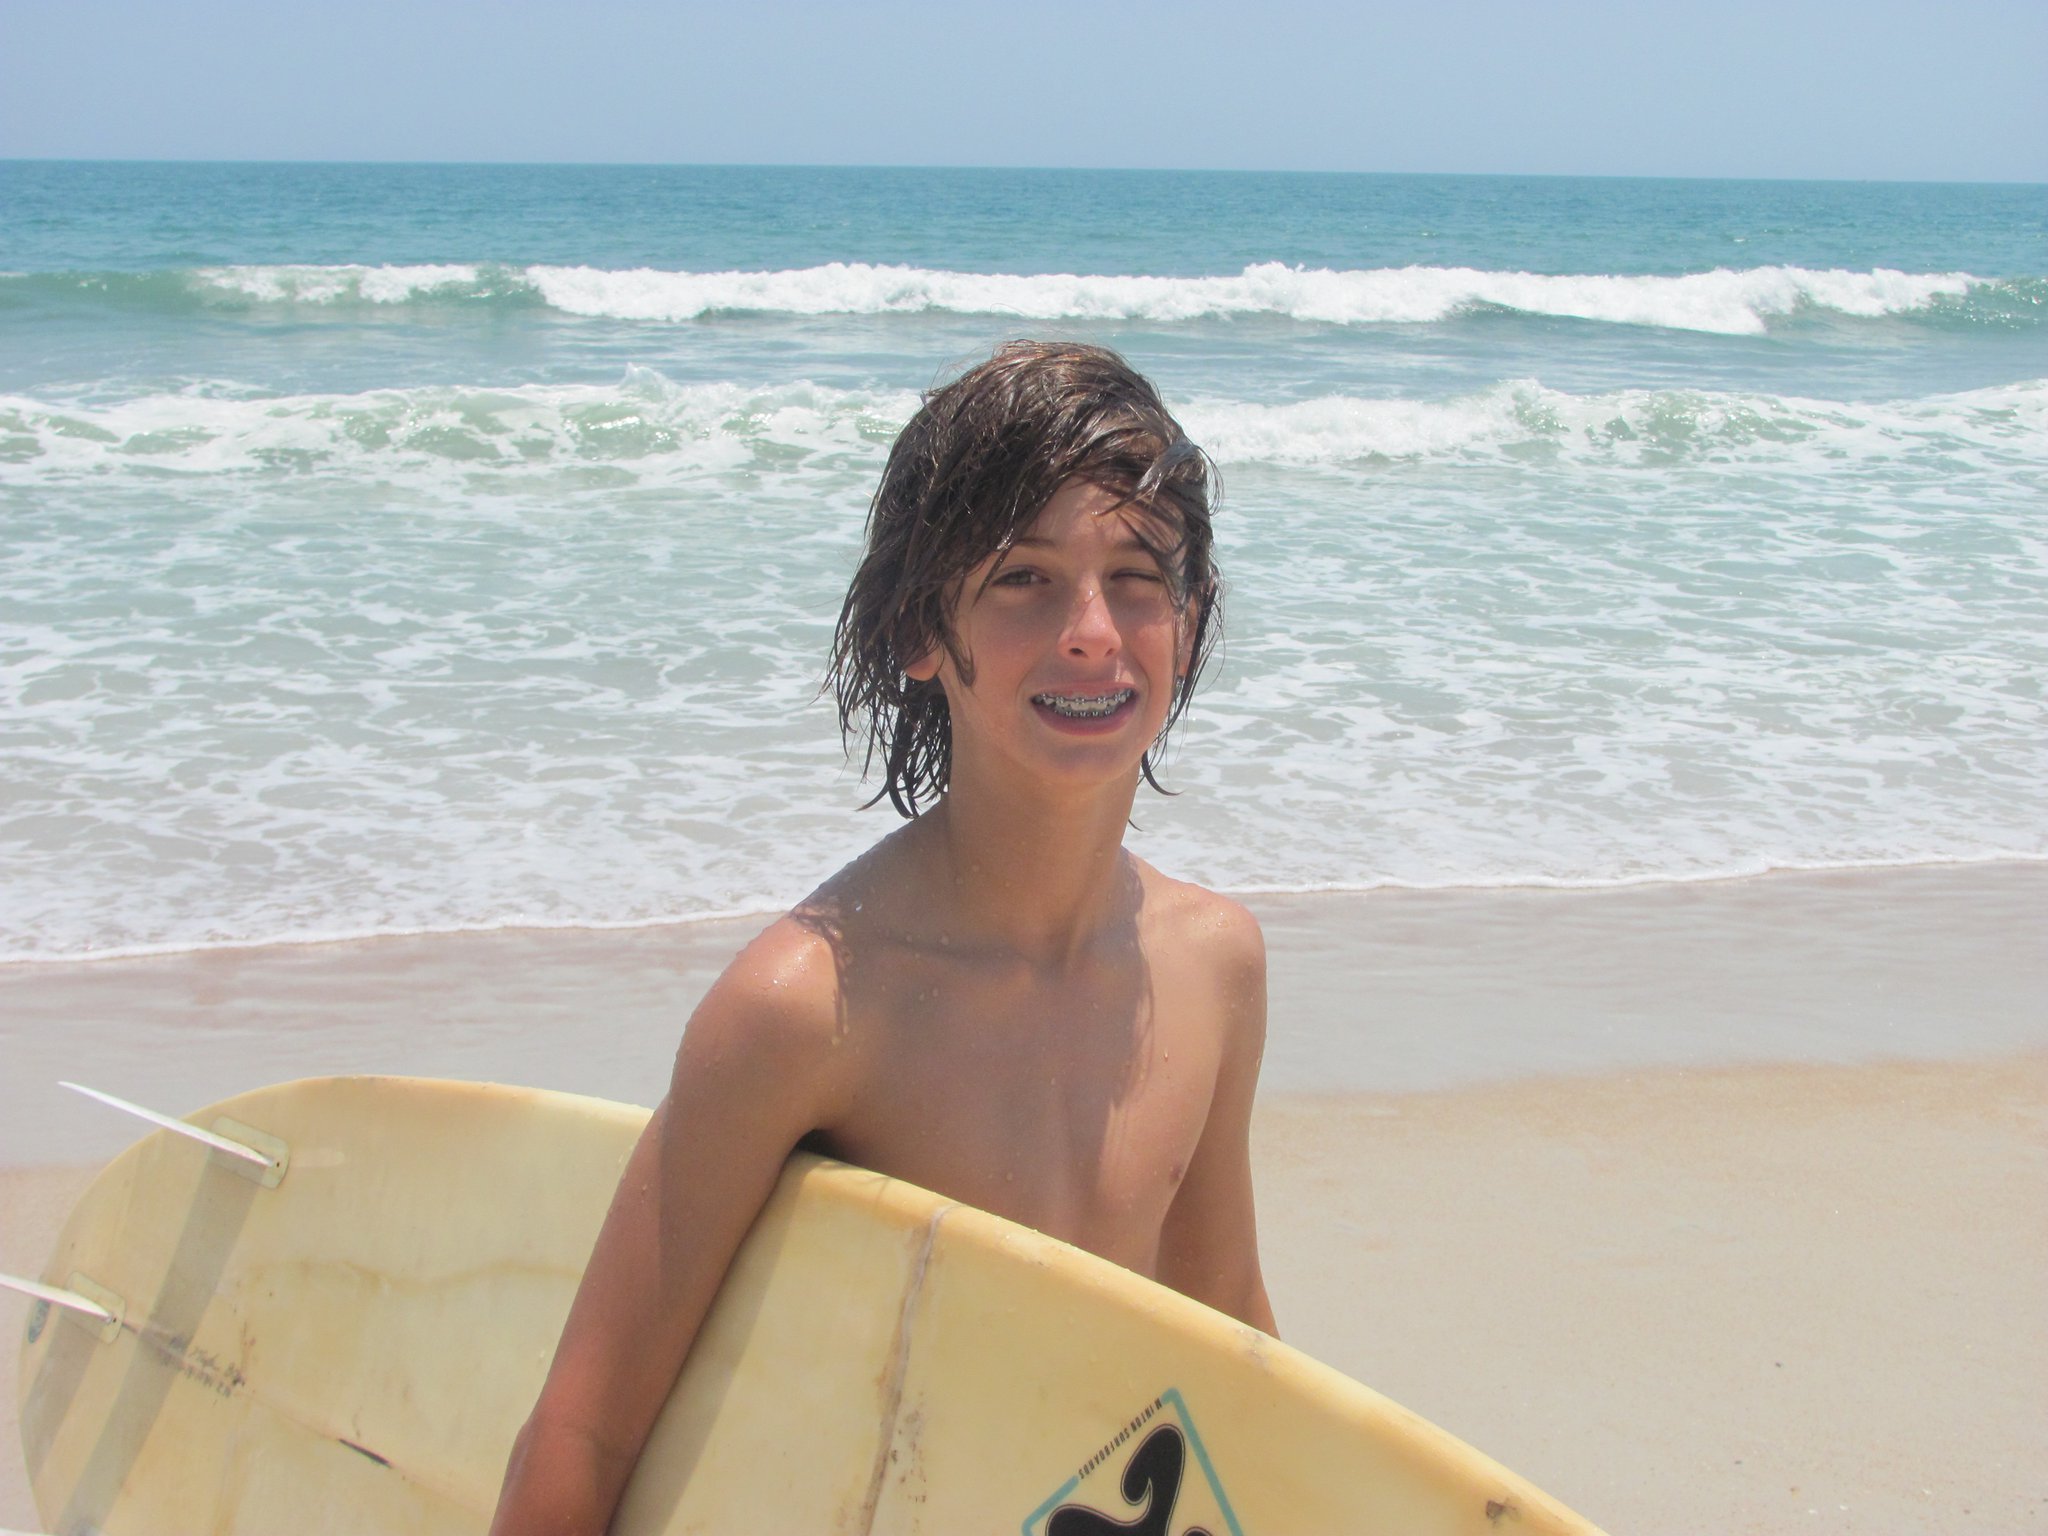 boy walking on beach with surfboard